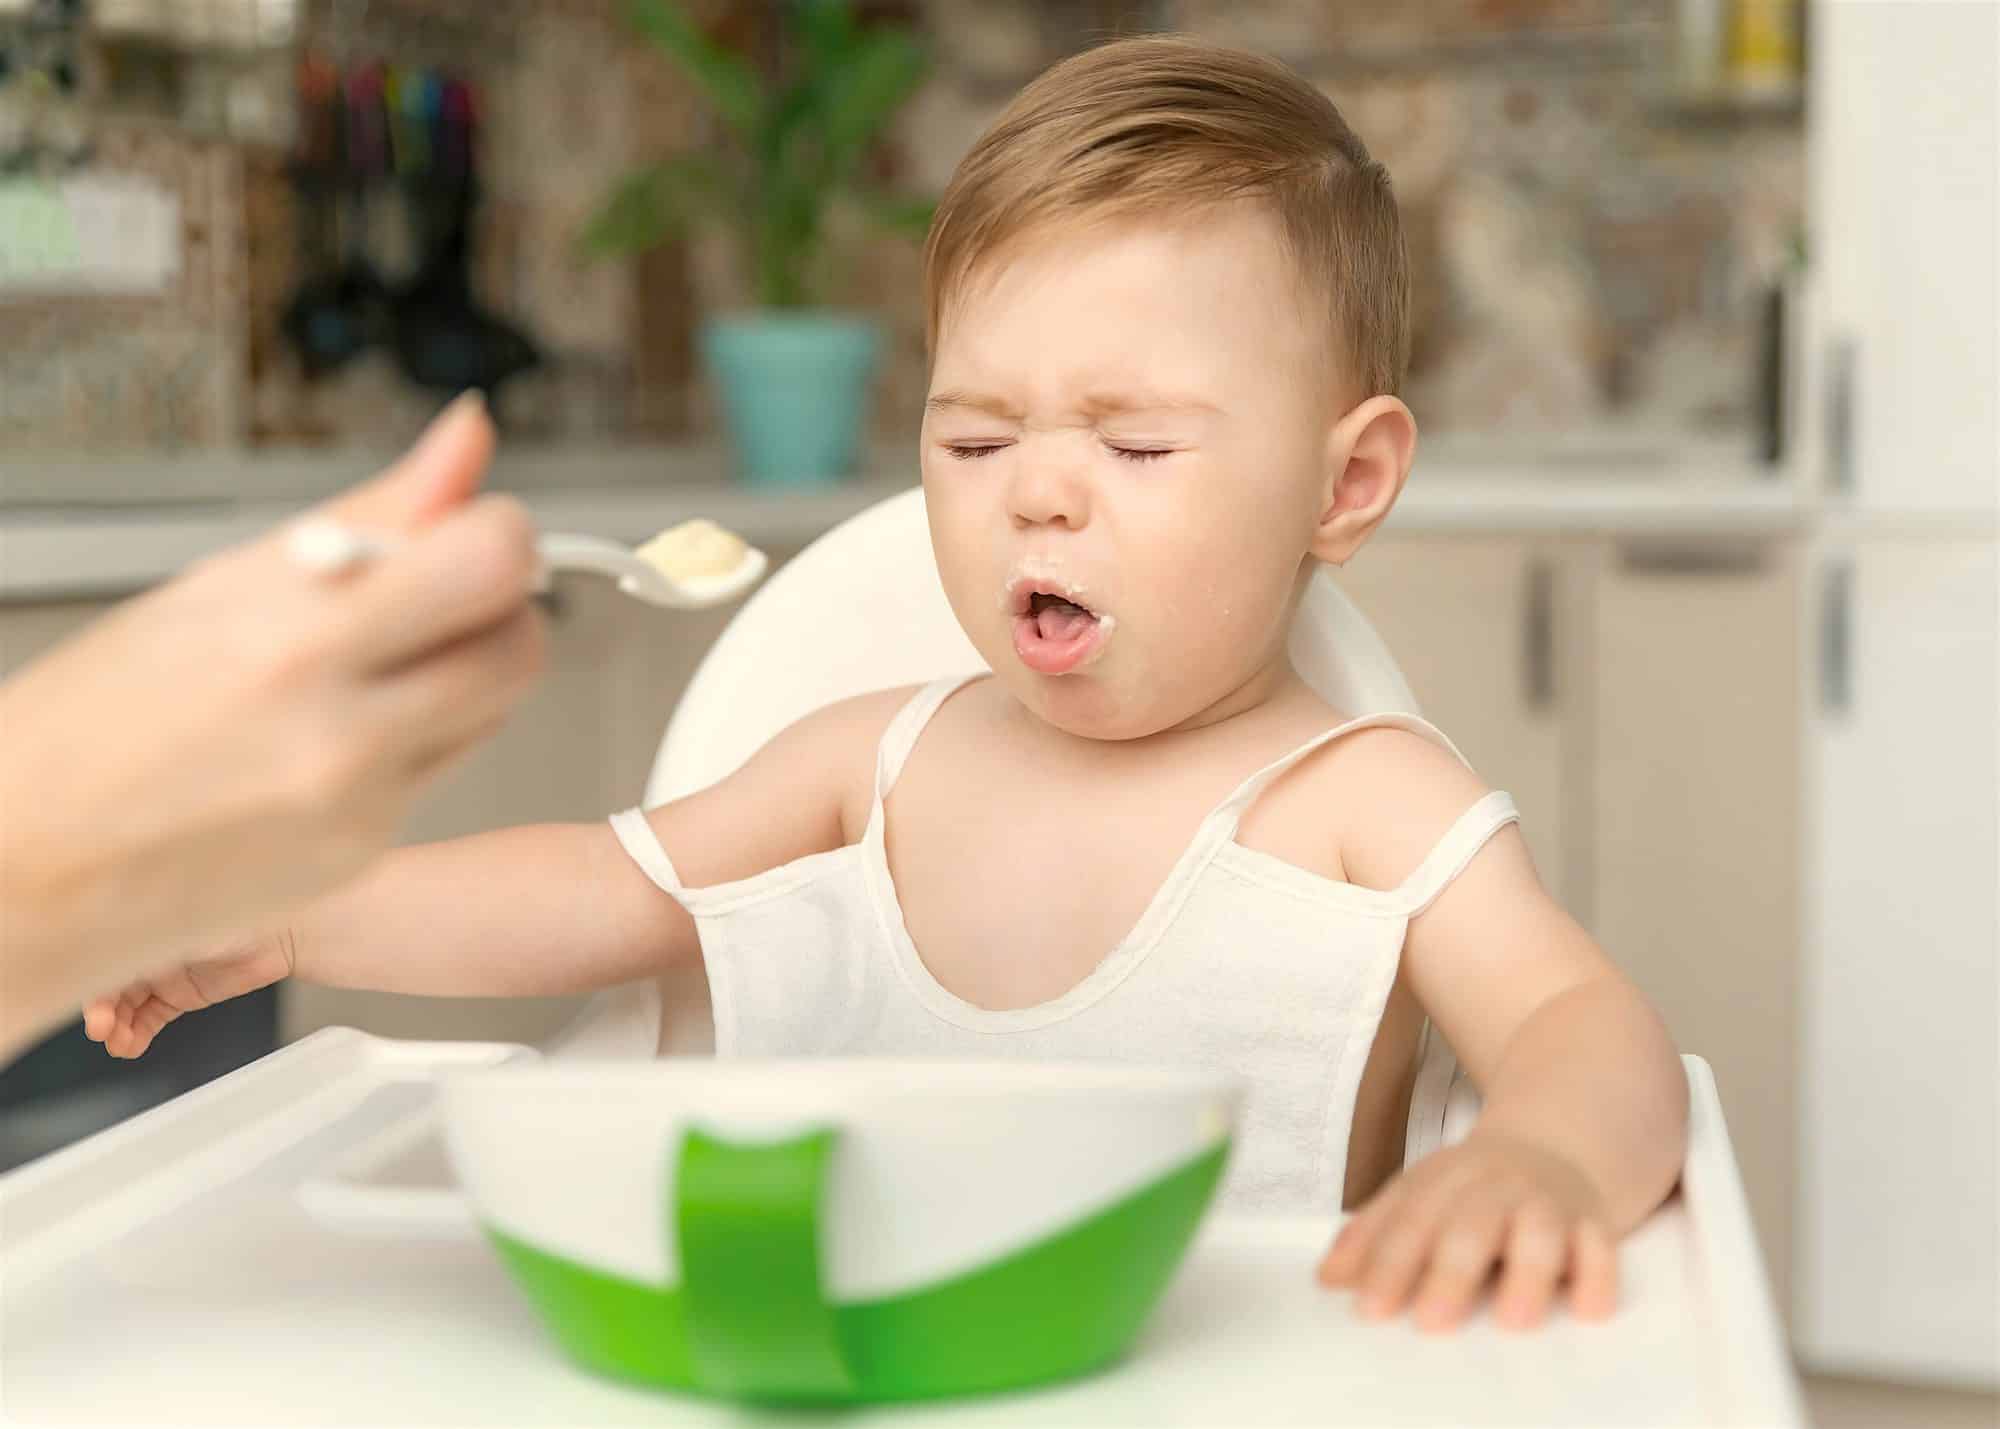 Suplementación infantil: ¿Está indicada si mi hijo no come sólidos?